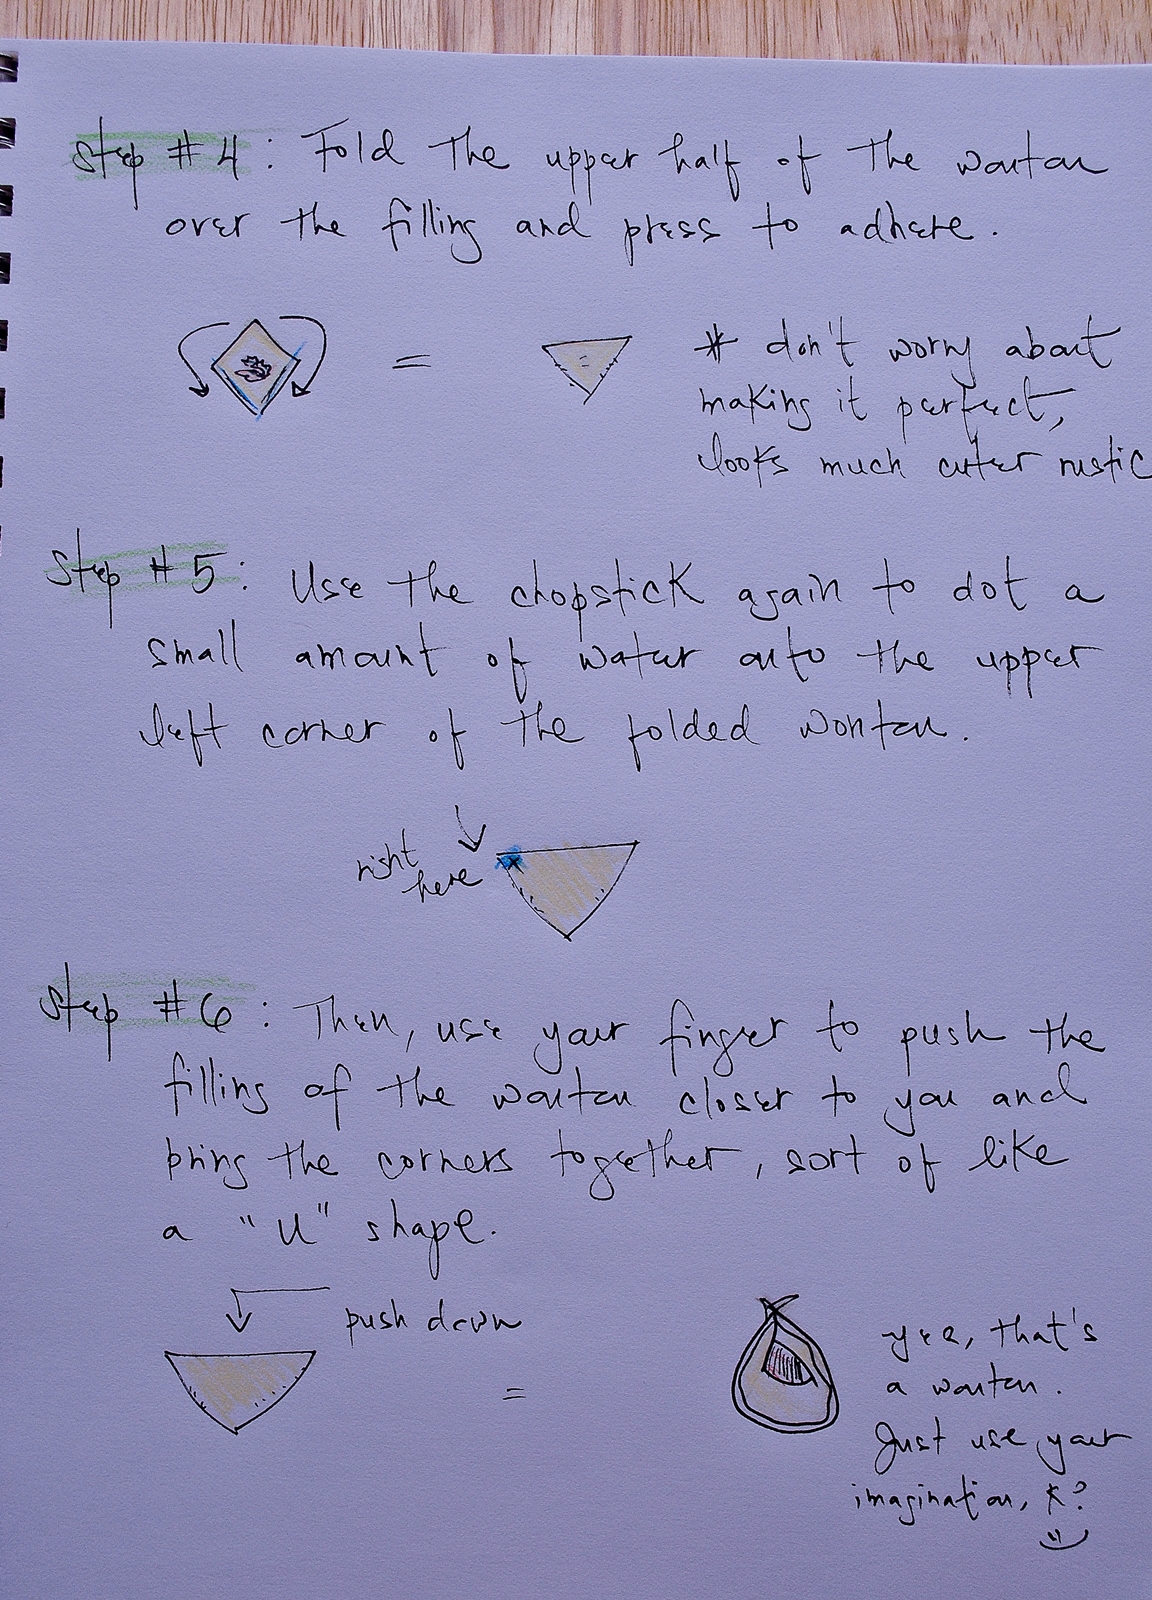 How to fold a wonton